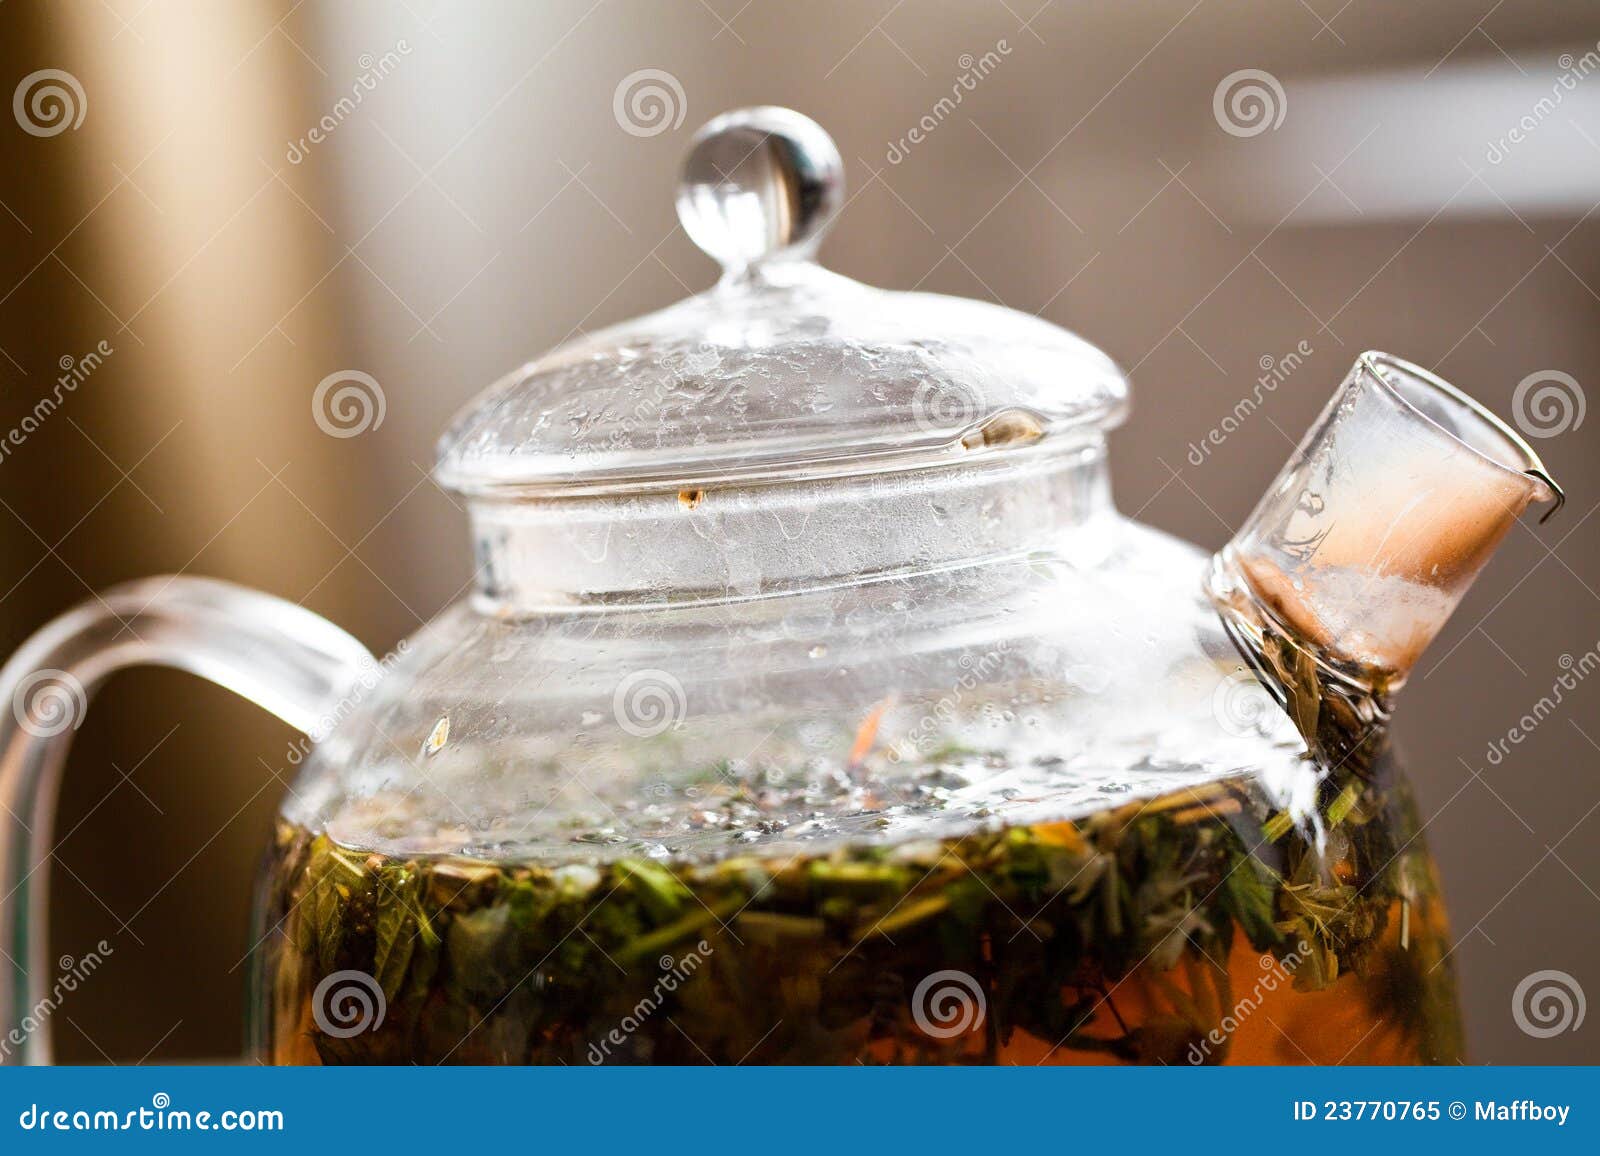 herbal tea in glass teapot